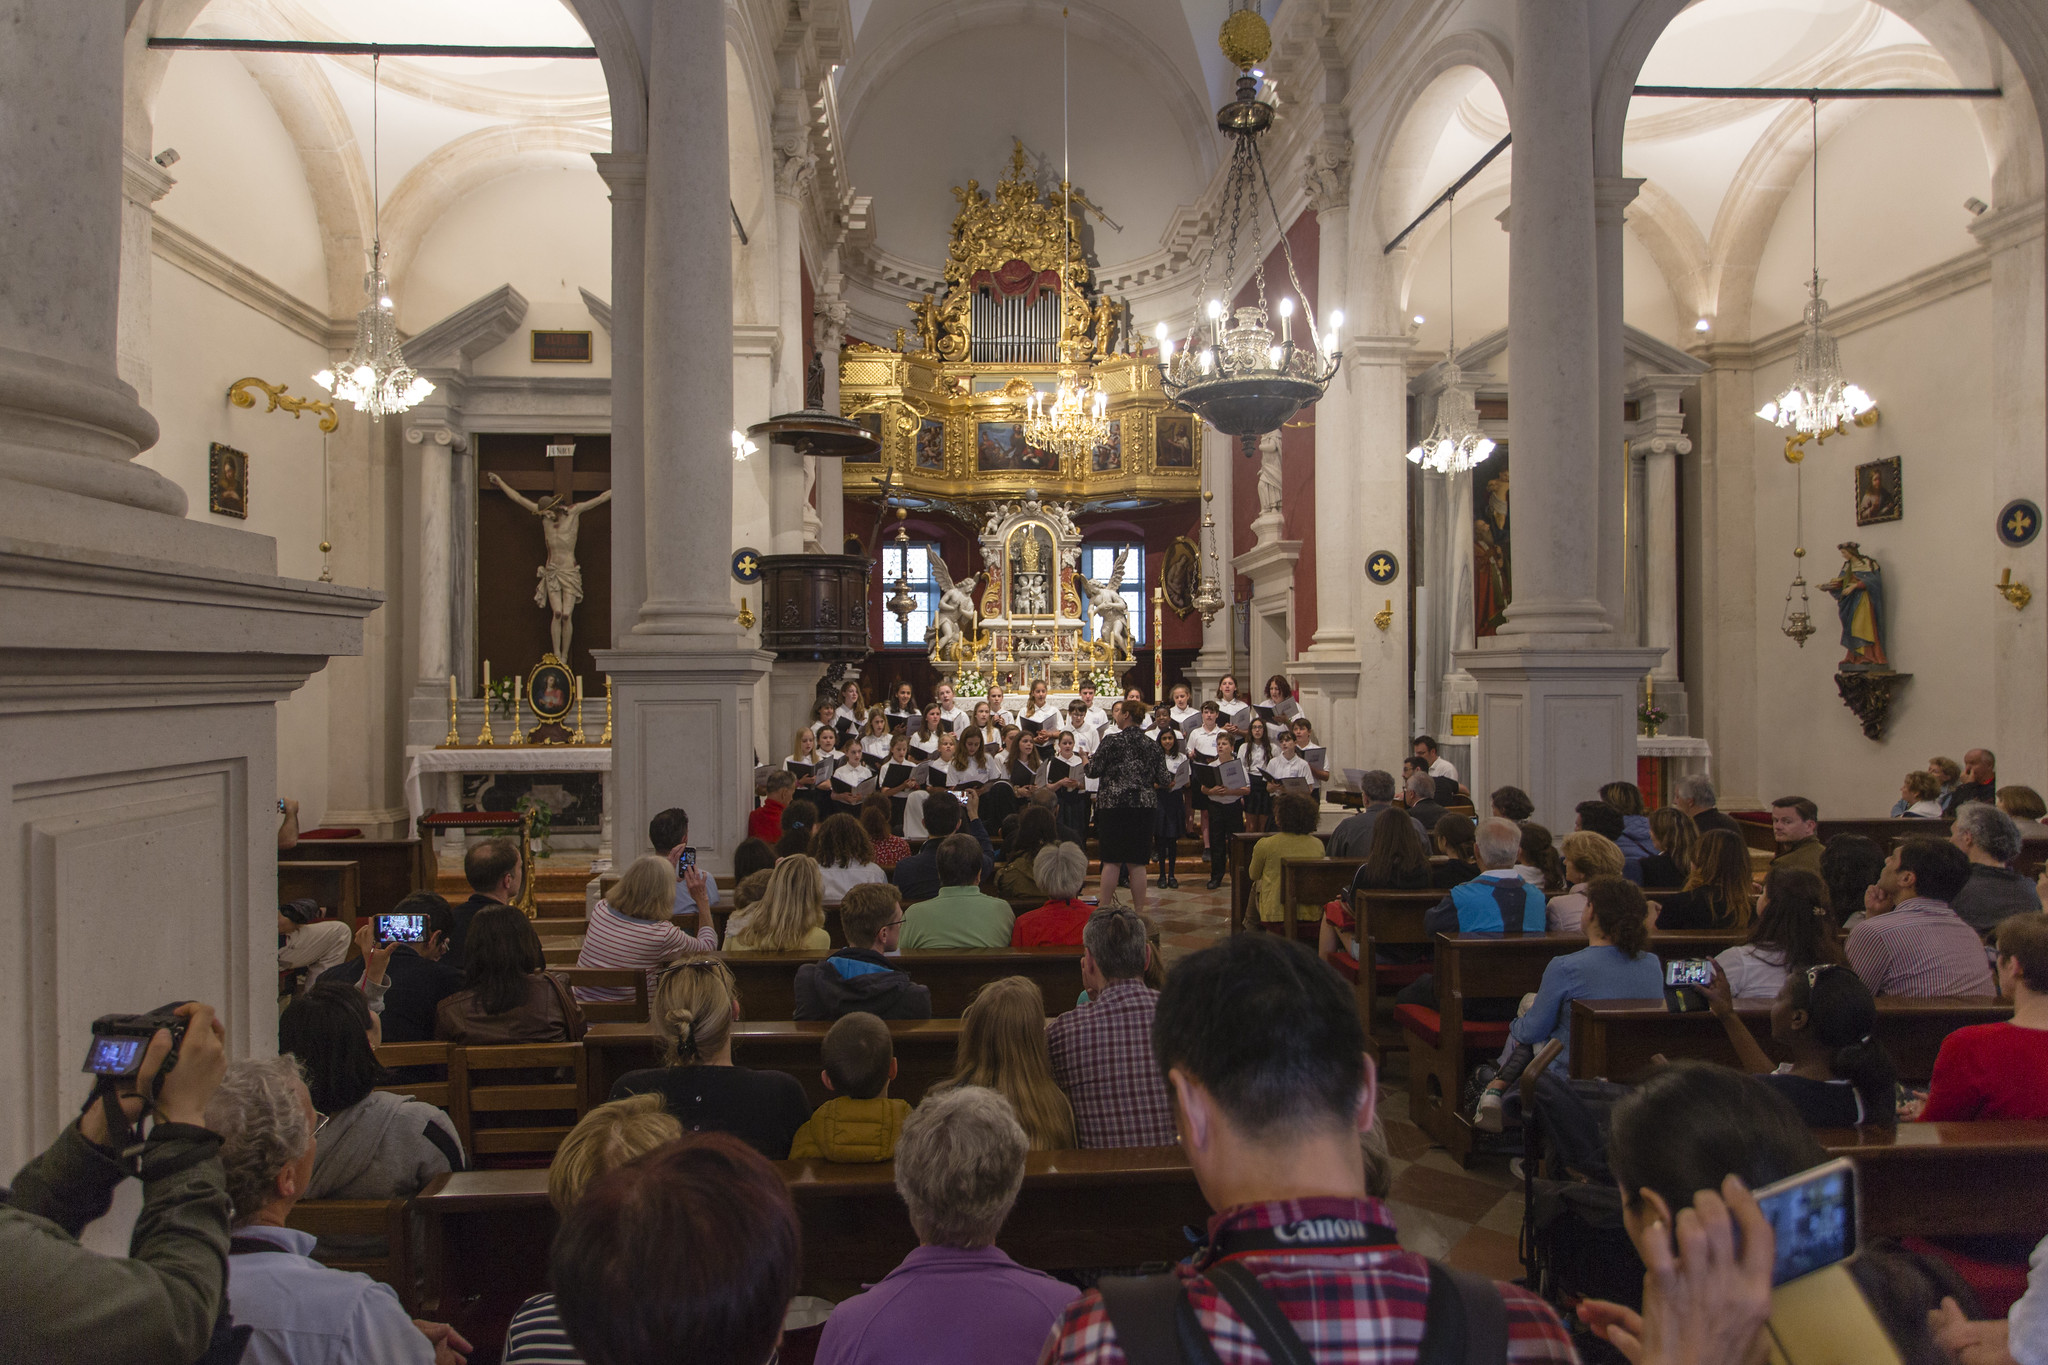 The British School in the Netherlands Concert Choir sings in Croatia